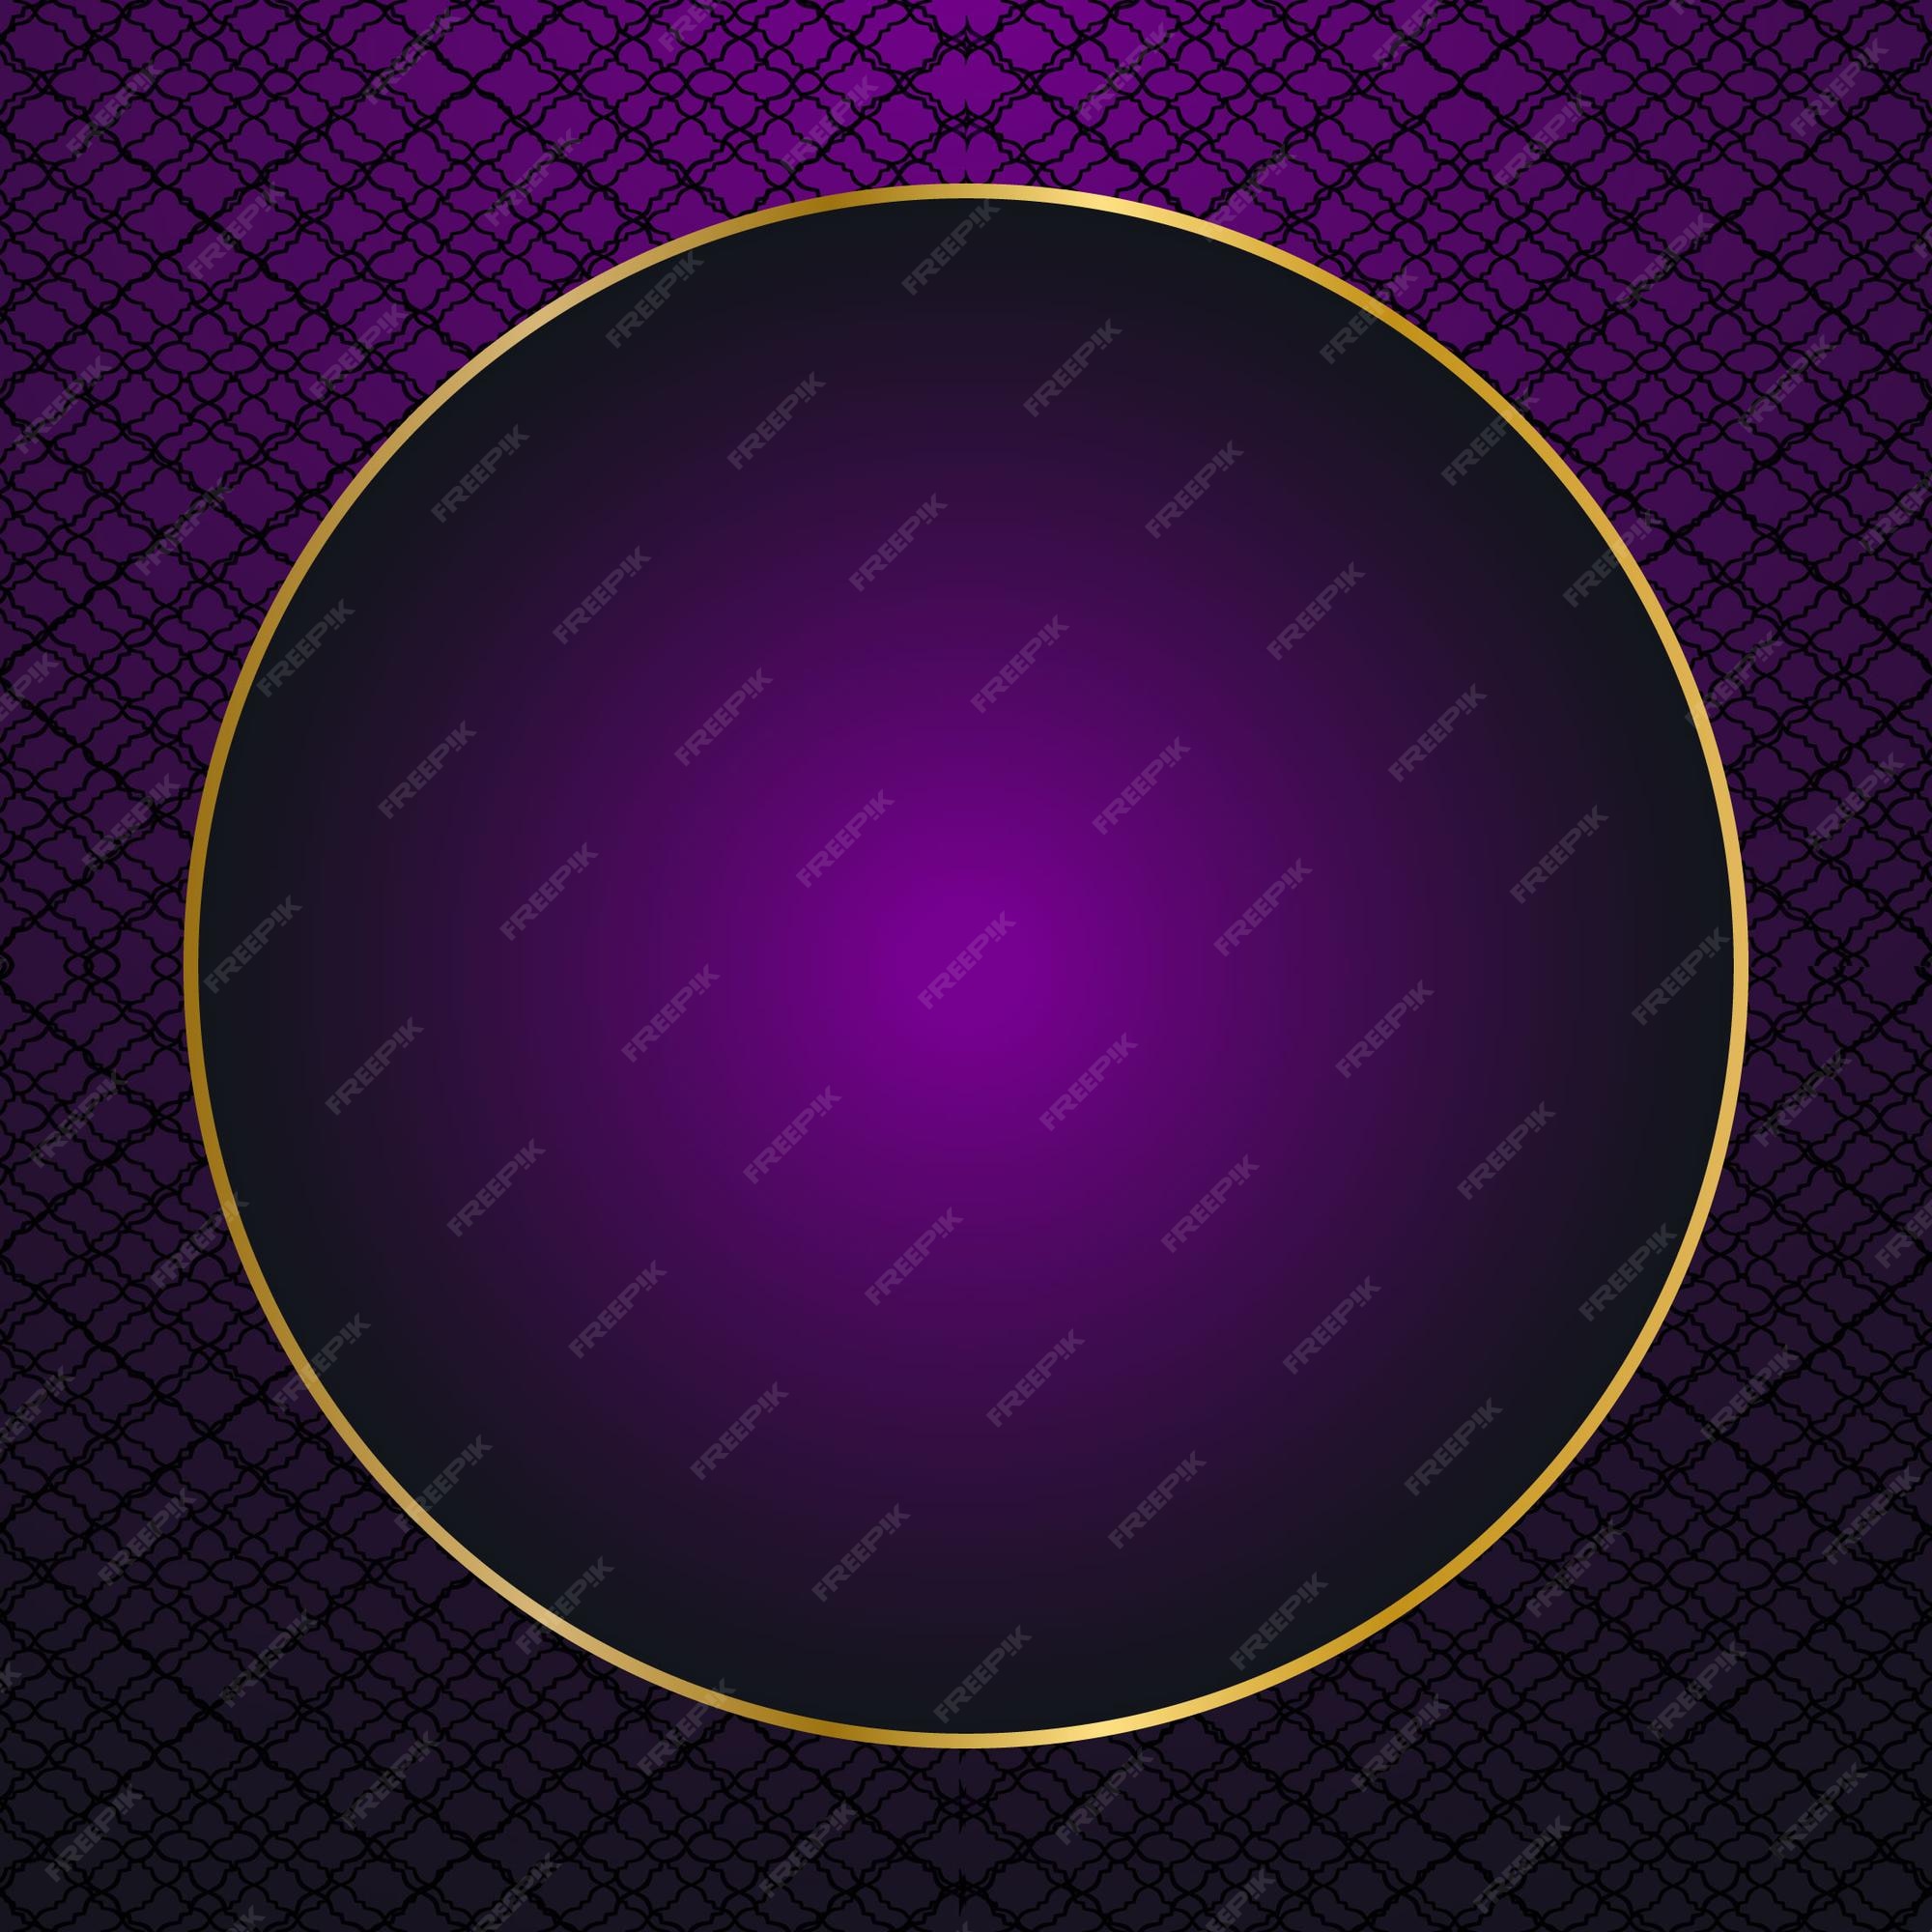 Premium Vector | New elegant purple background with luxurious round shape